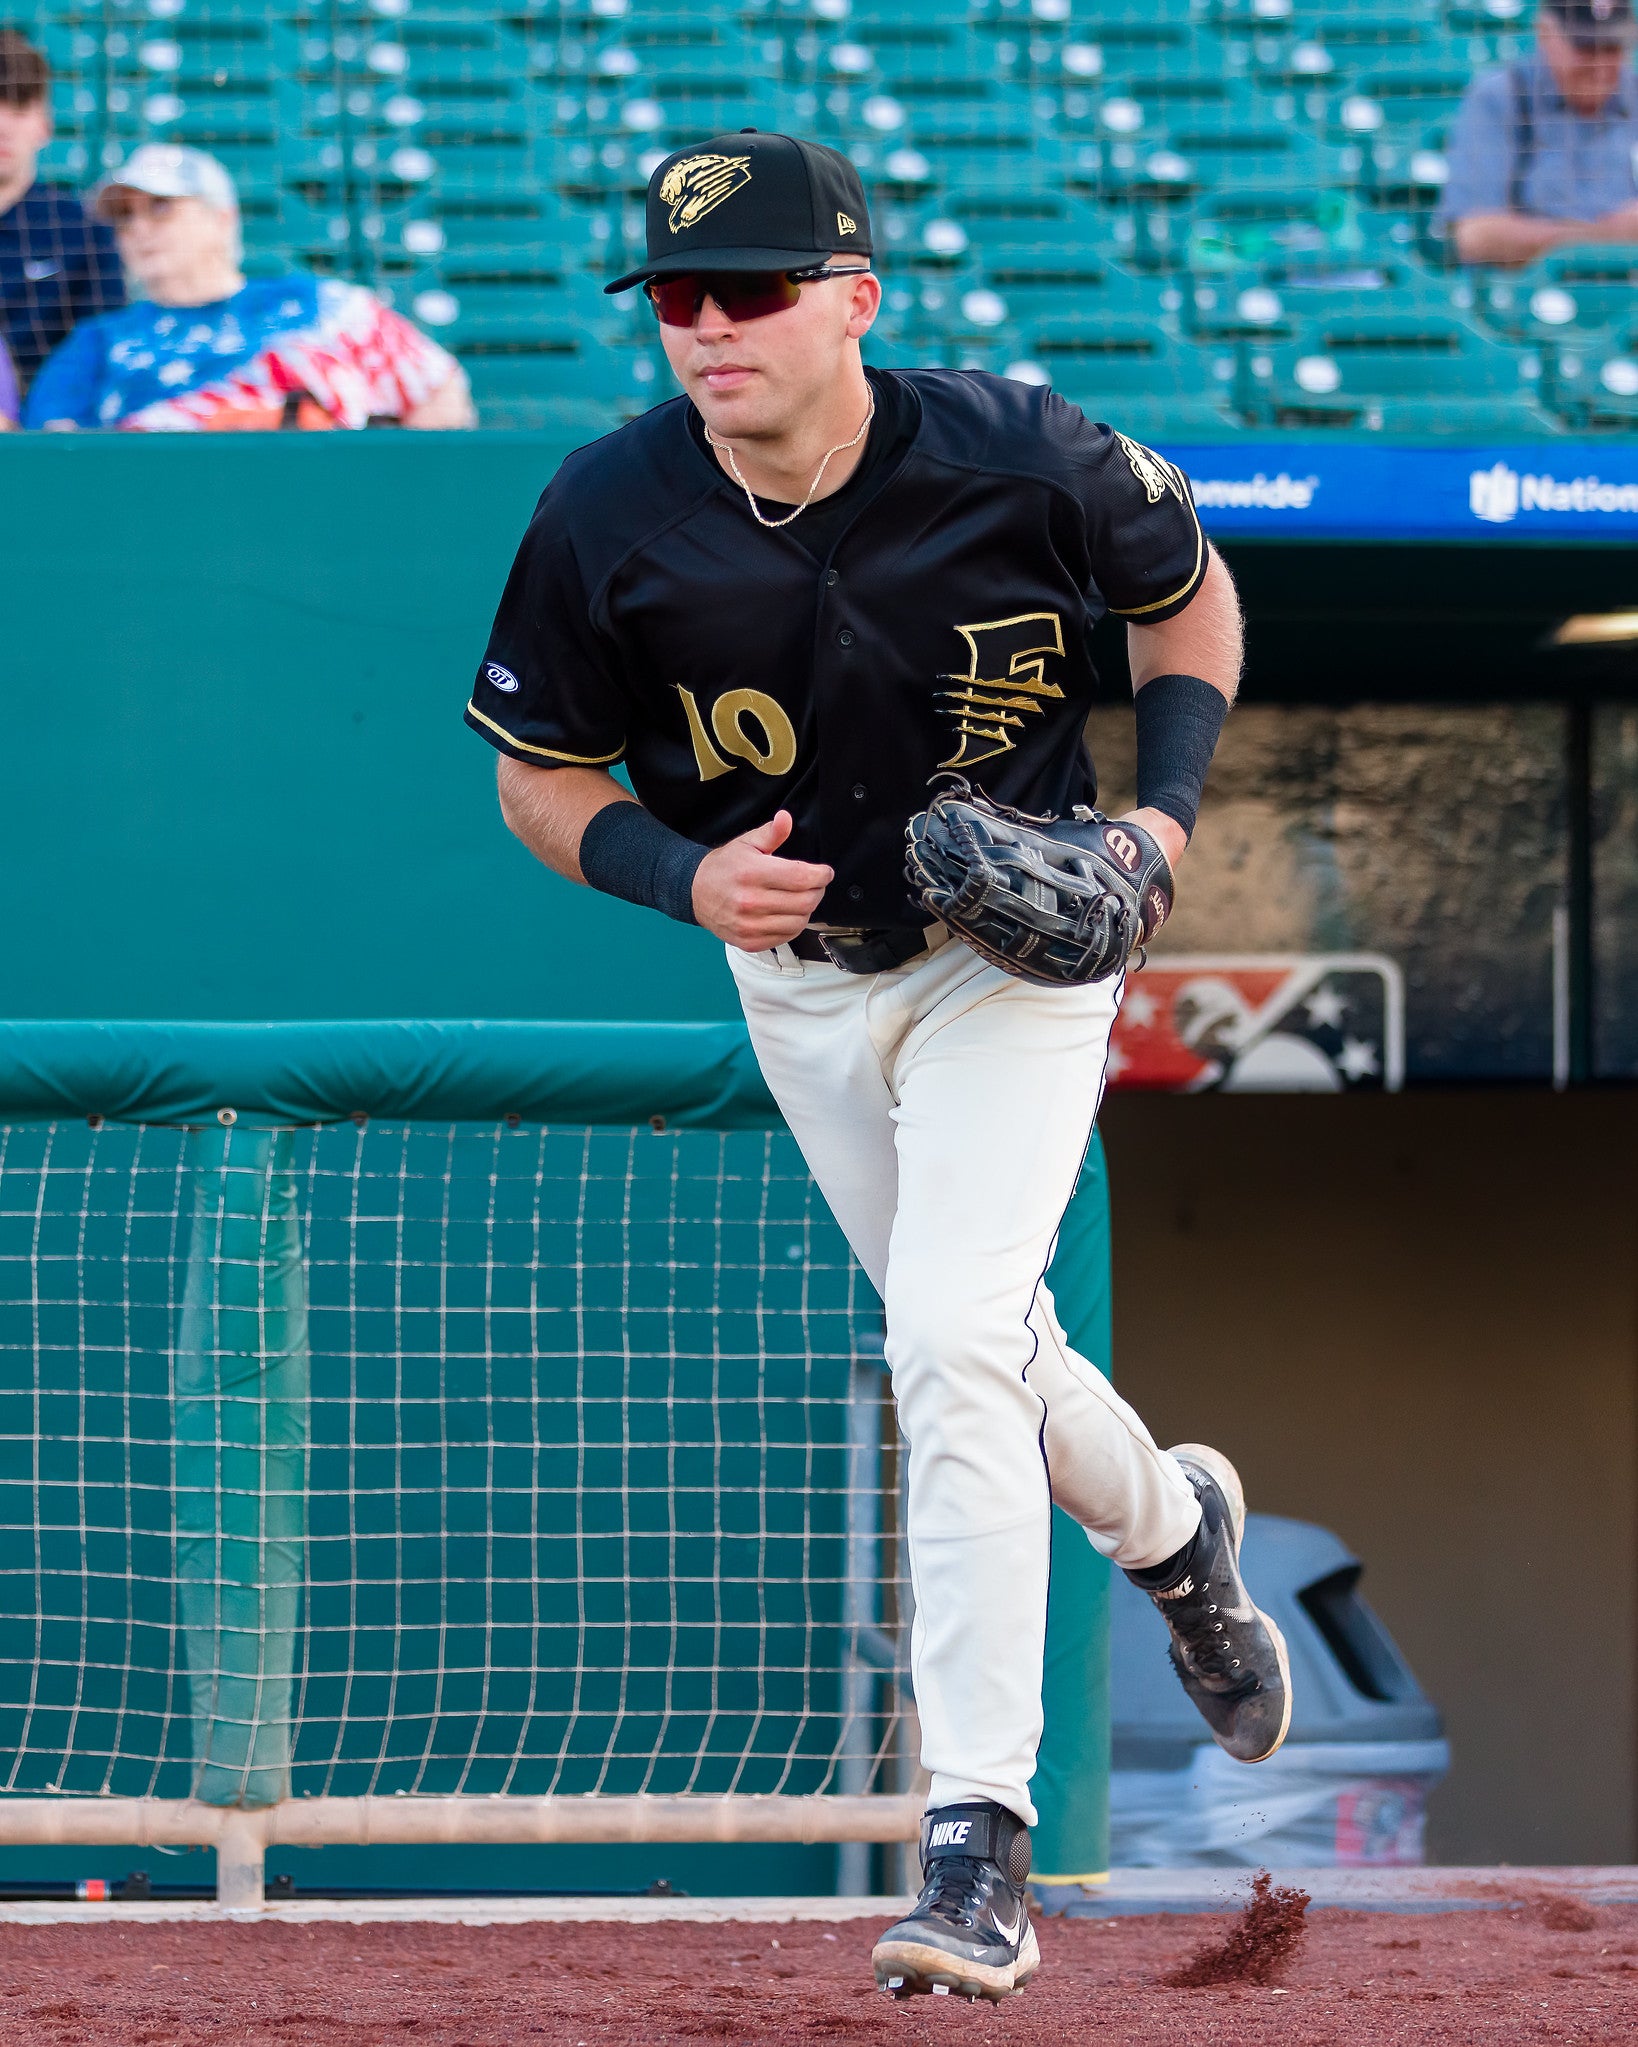 black and gold baseball uniforms